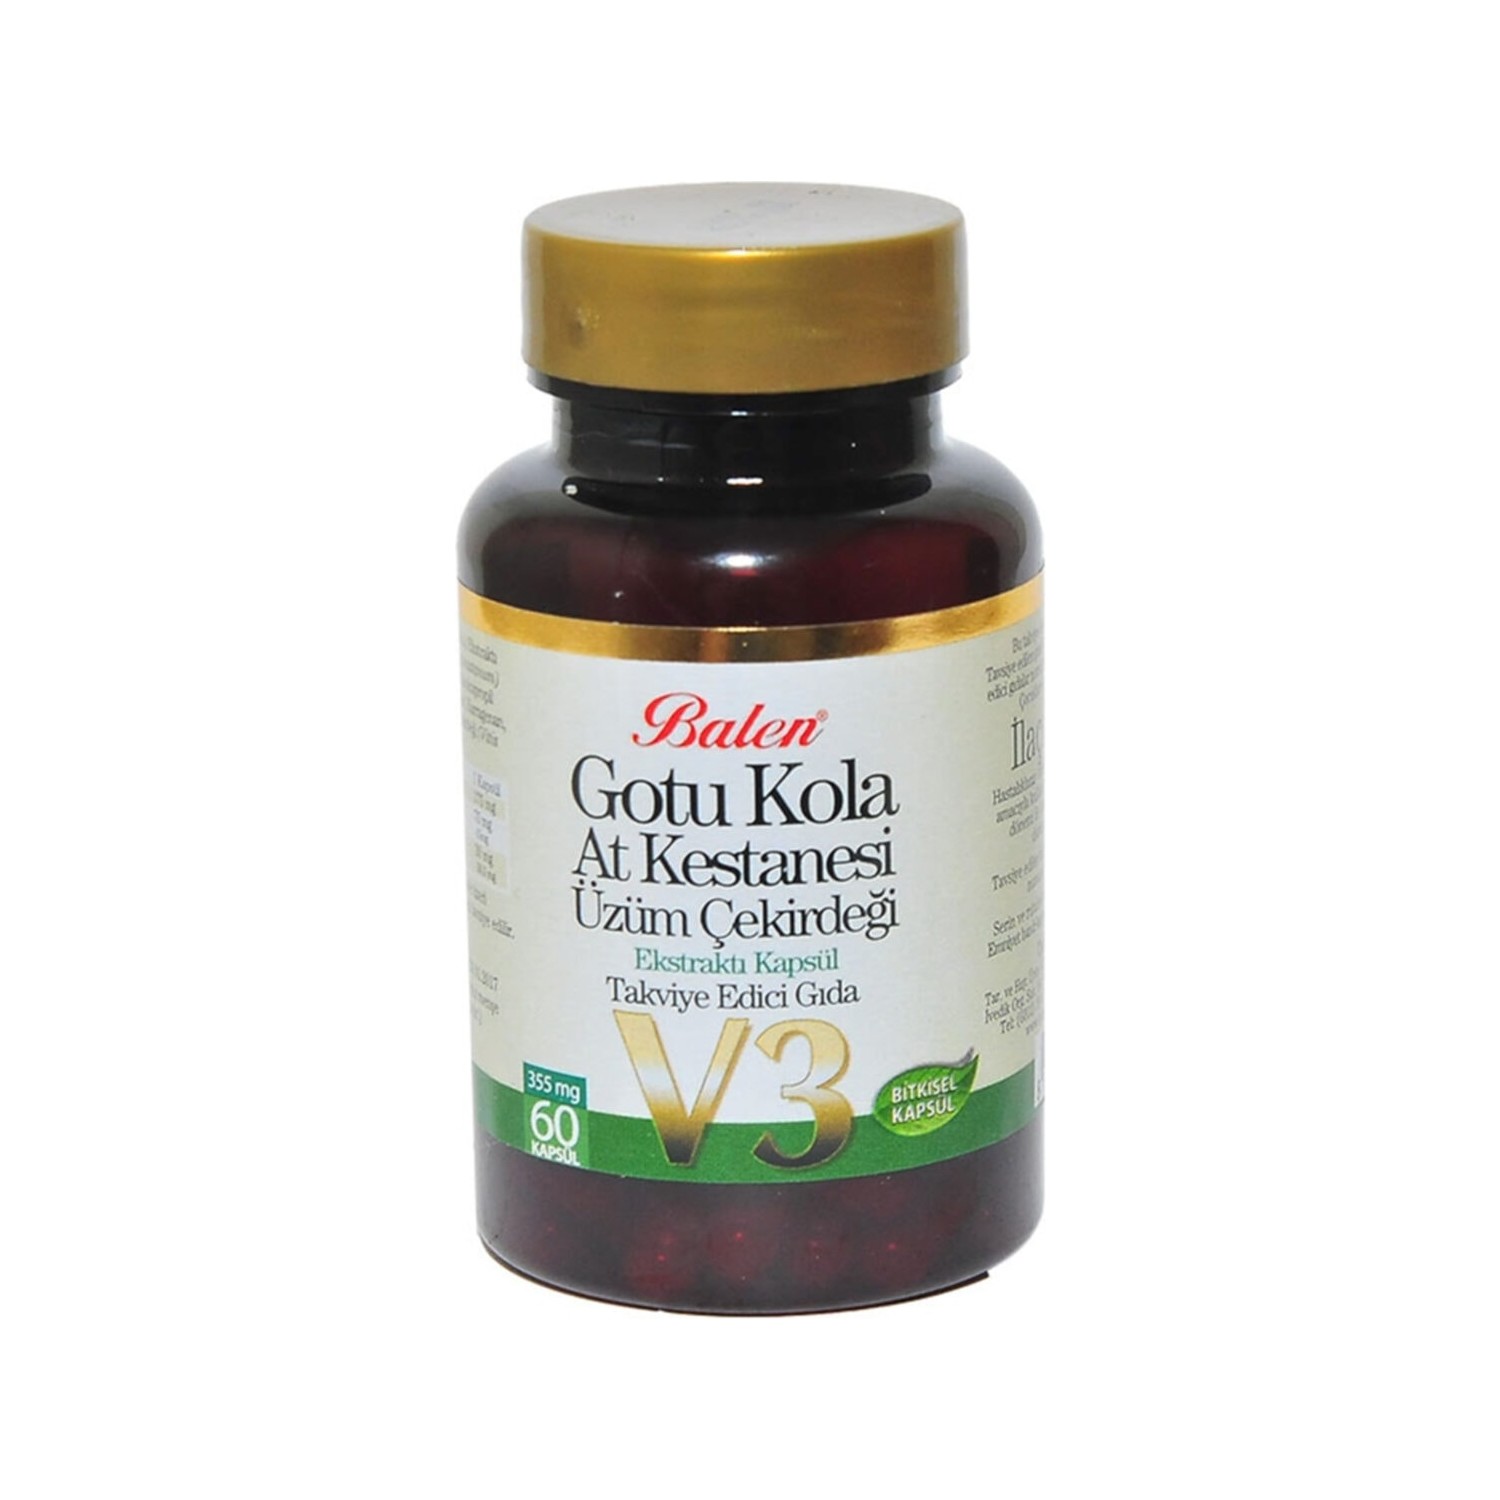 Активная добавка Balen Gotu Kola Horse Chestnut Grape Seed Extract V3, 60 капсул, 355 мг swanson экстракт конского каштана 250 мг 120 капсул